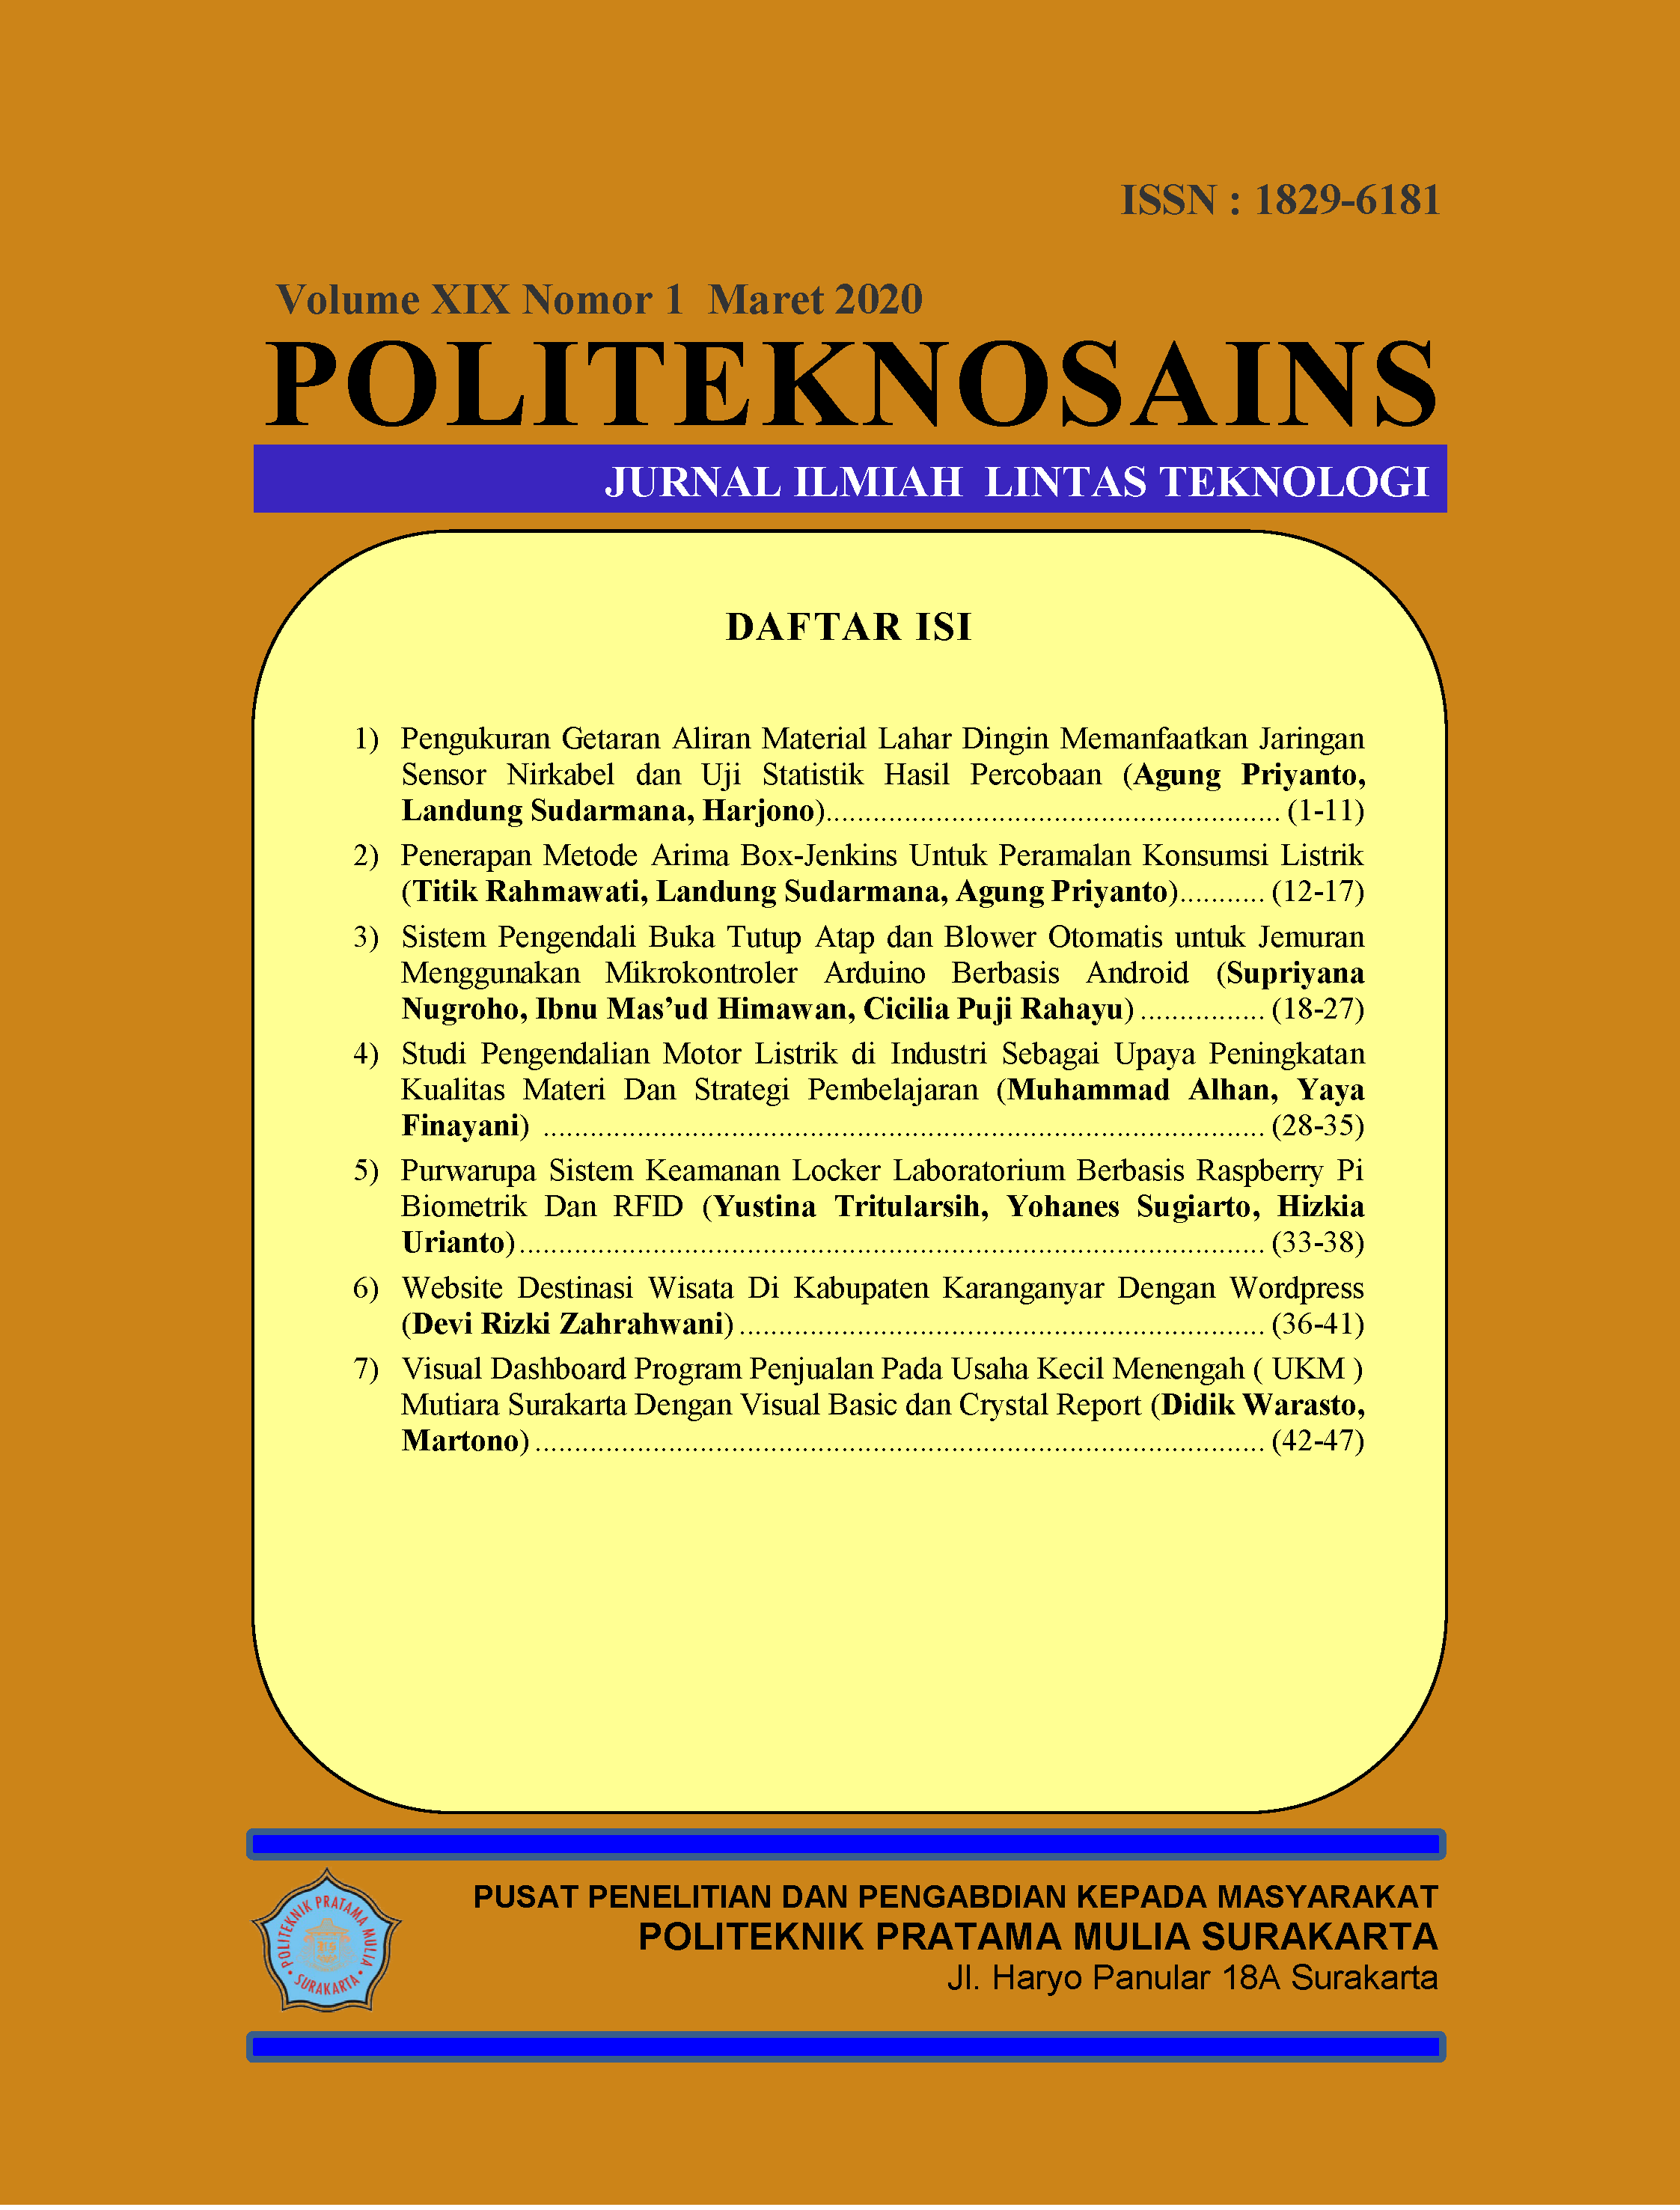 					Lihat Vol 19 No 1 (2020): Jurnal Politeknosains Volume 19 Nomor 1 - Maret  2020
				